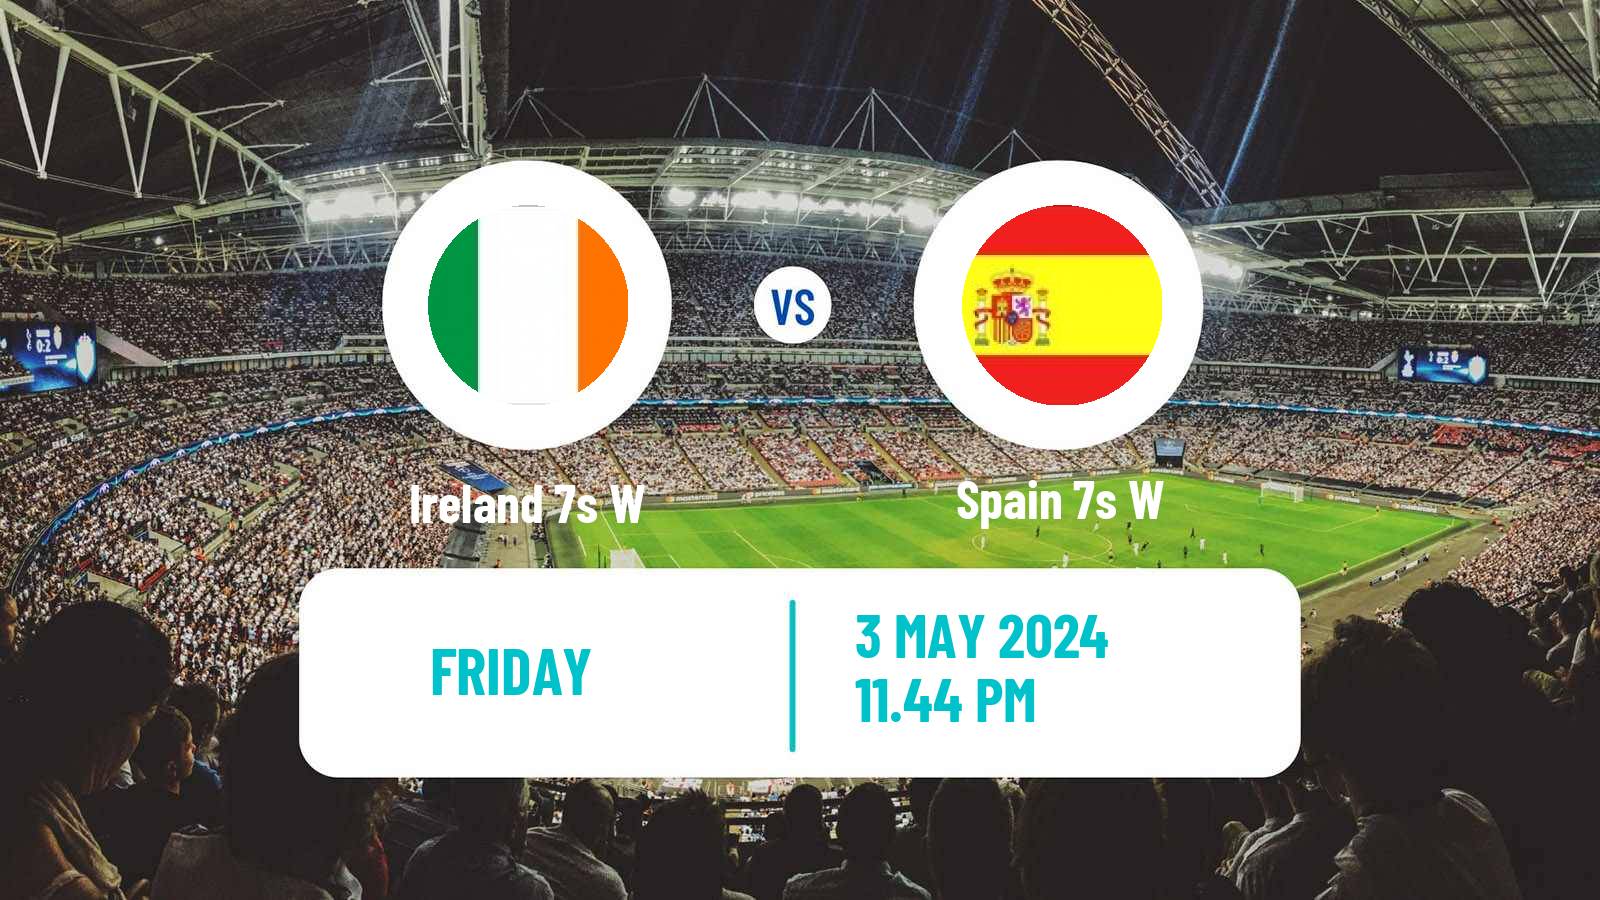 Soccer Sevens World Series Women - Singapore Ireland 7s W - Spain 7s W